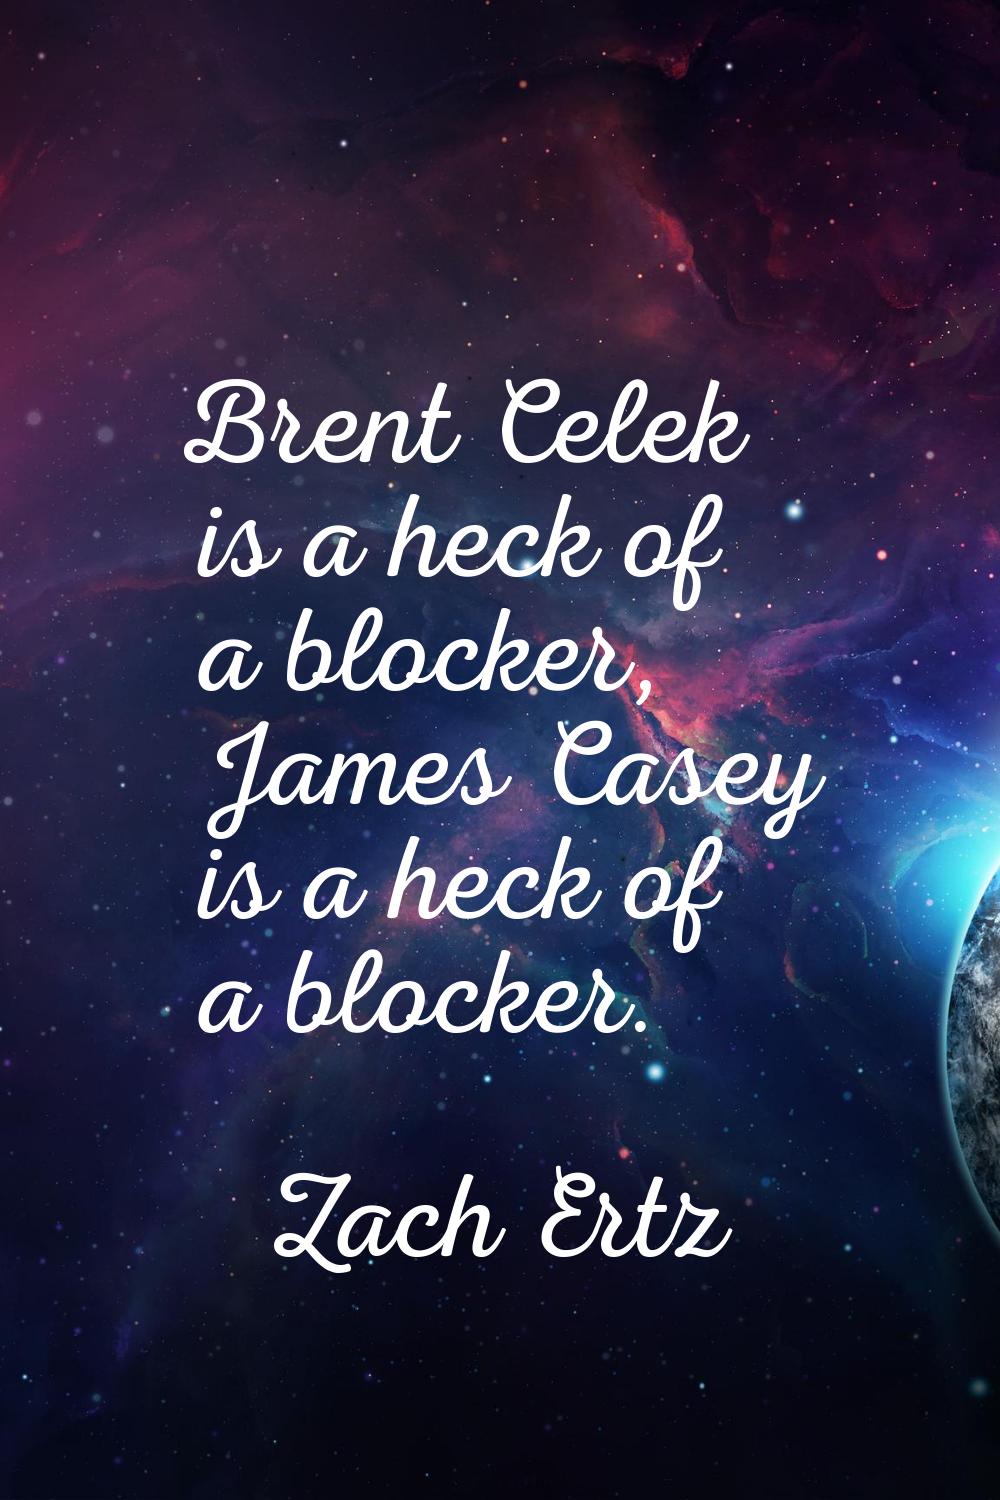 Brent Celek is a heck of a blocker, James Casey is a heck of a blocker.